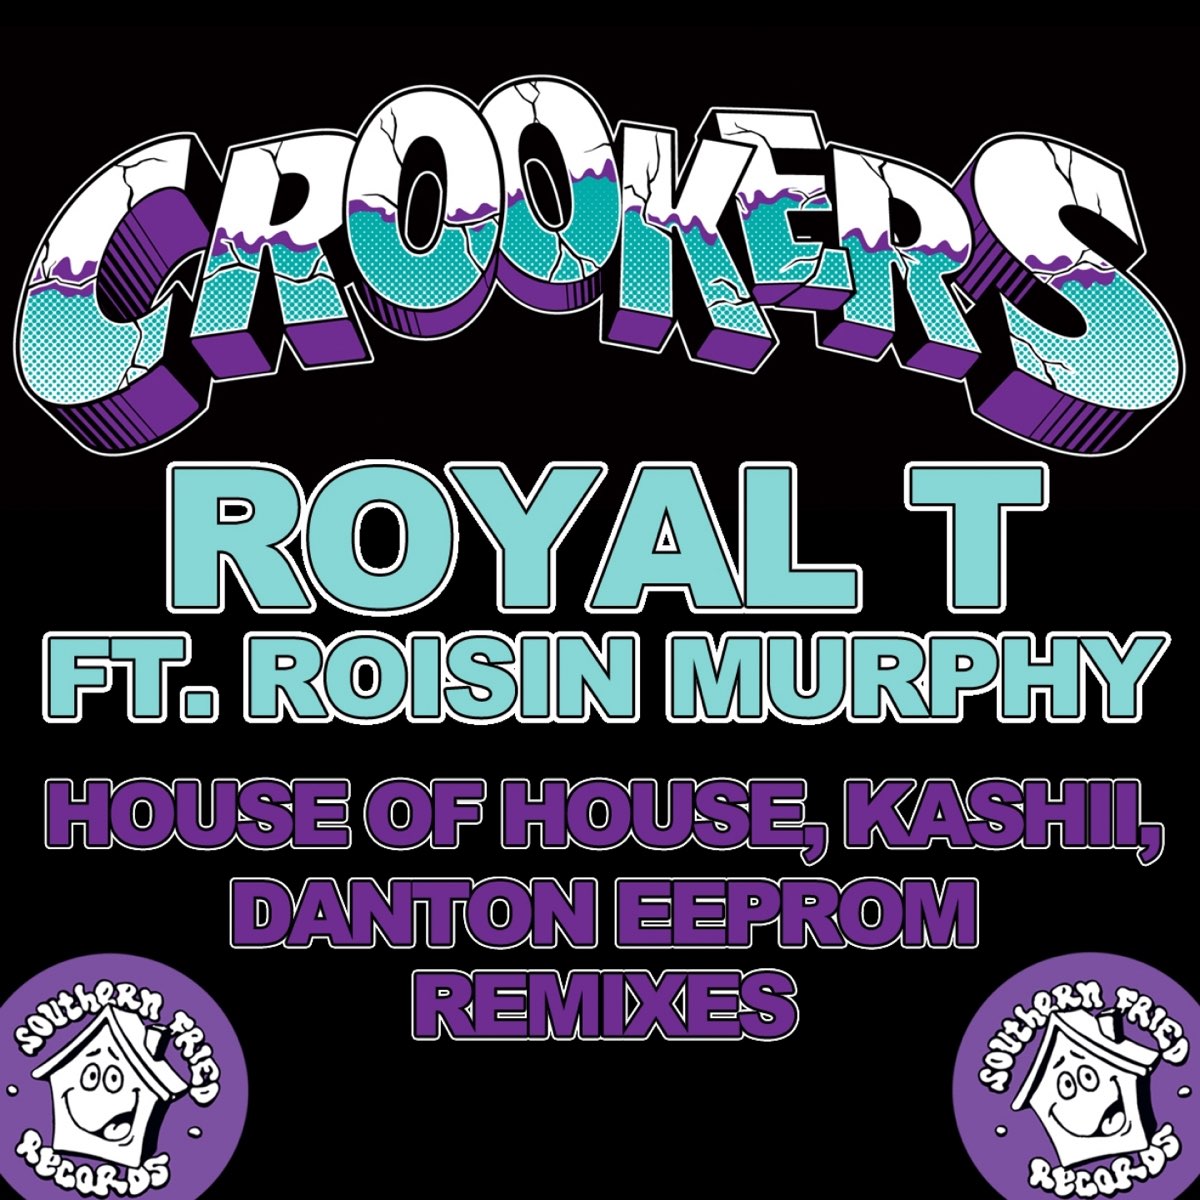 Royalty remix. DJ Crookers. Росин Мерфи Moloko. Roisin Murphy overpowered Remix. Crookers, Kelis - no Security.